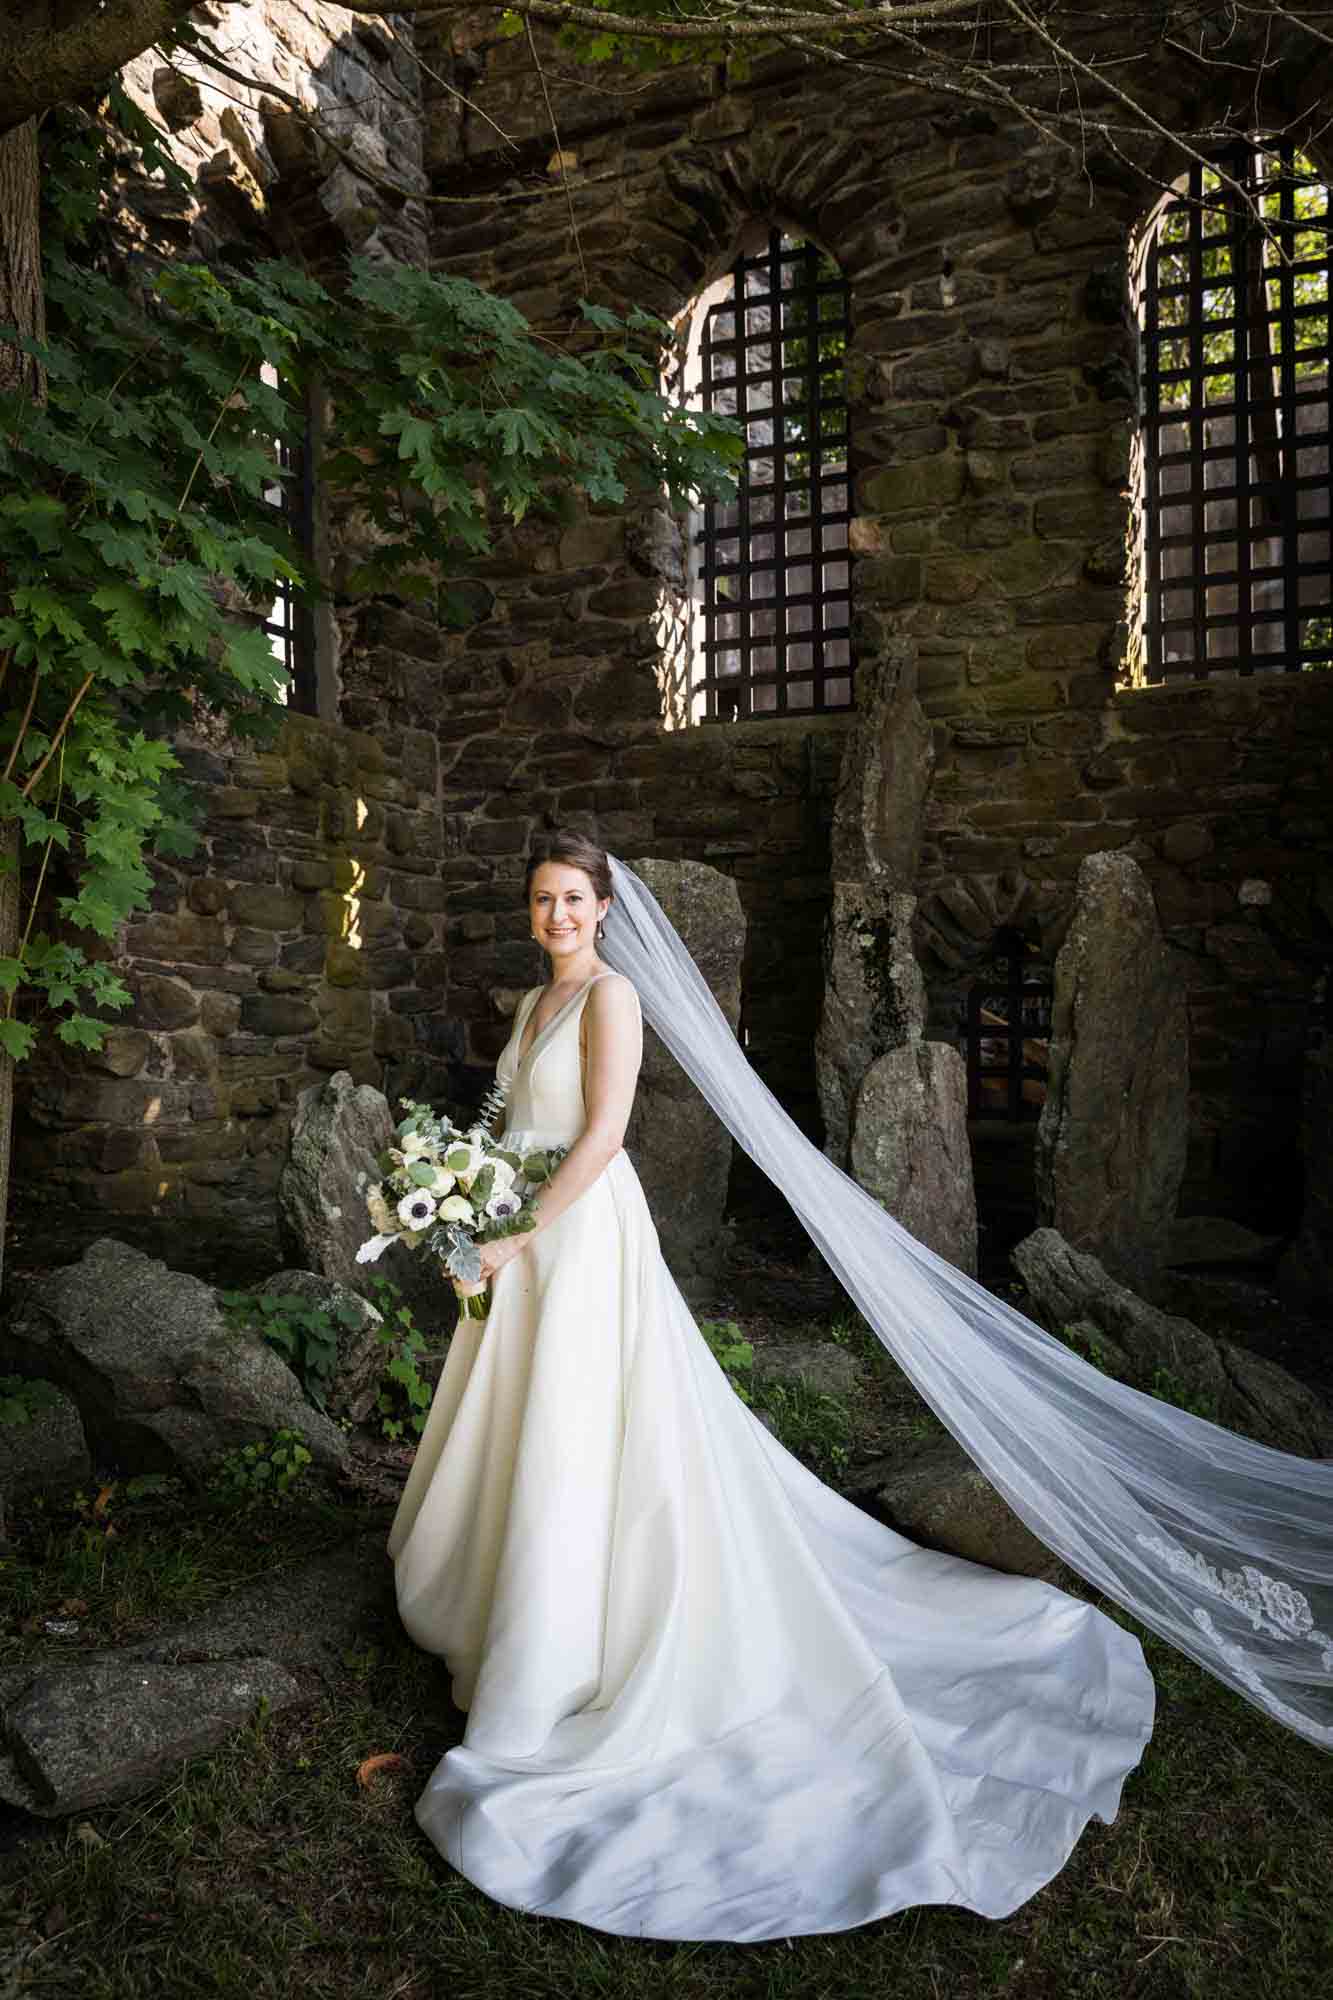 Glen Island Park wedding photo of bride wearing veil in front of castle ruins